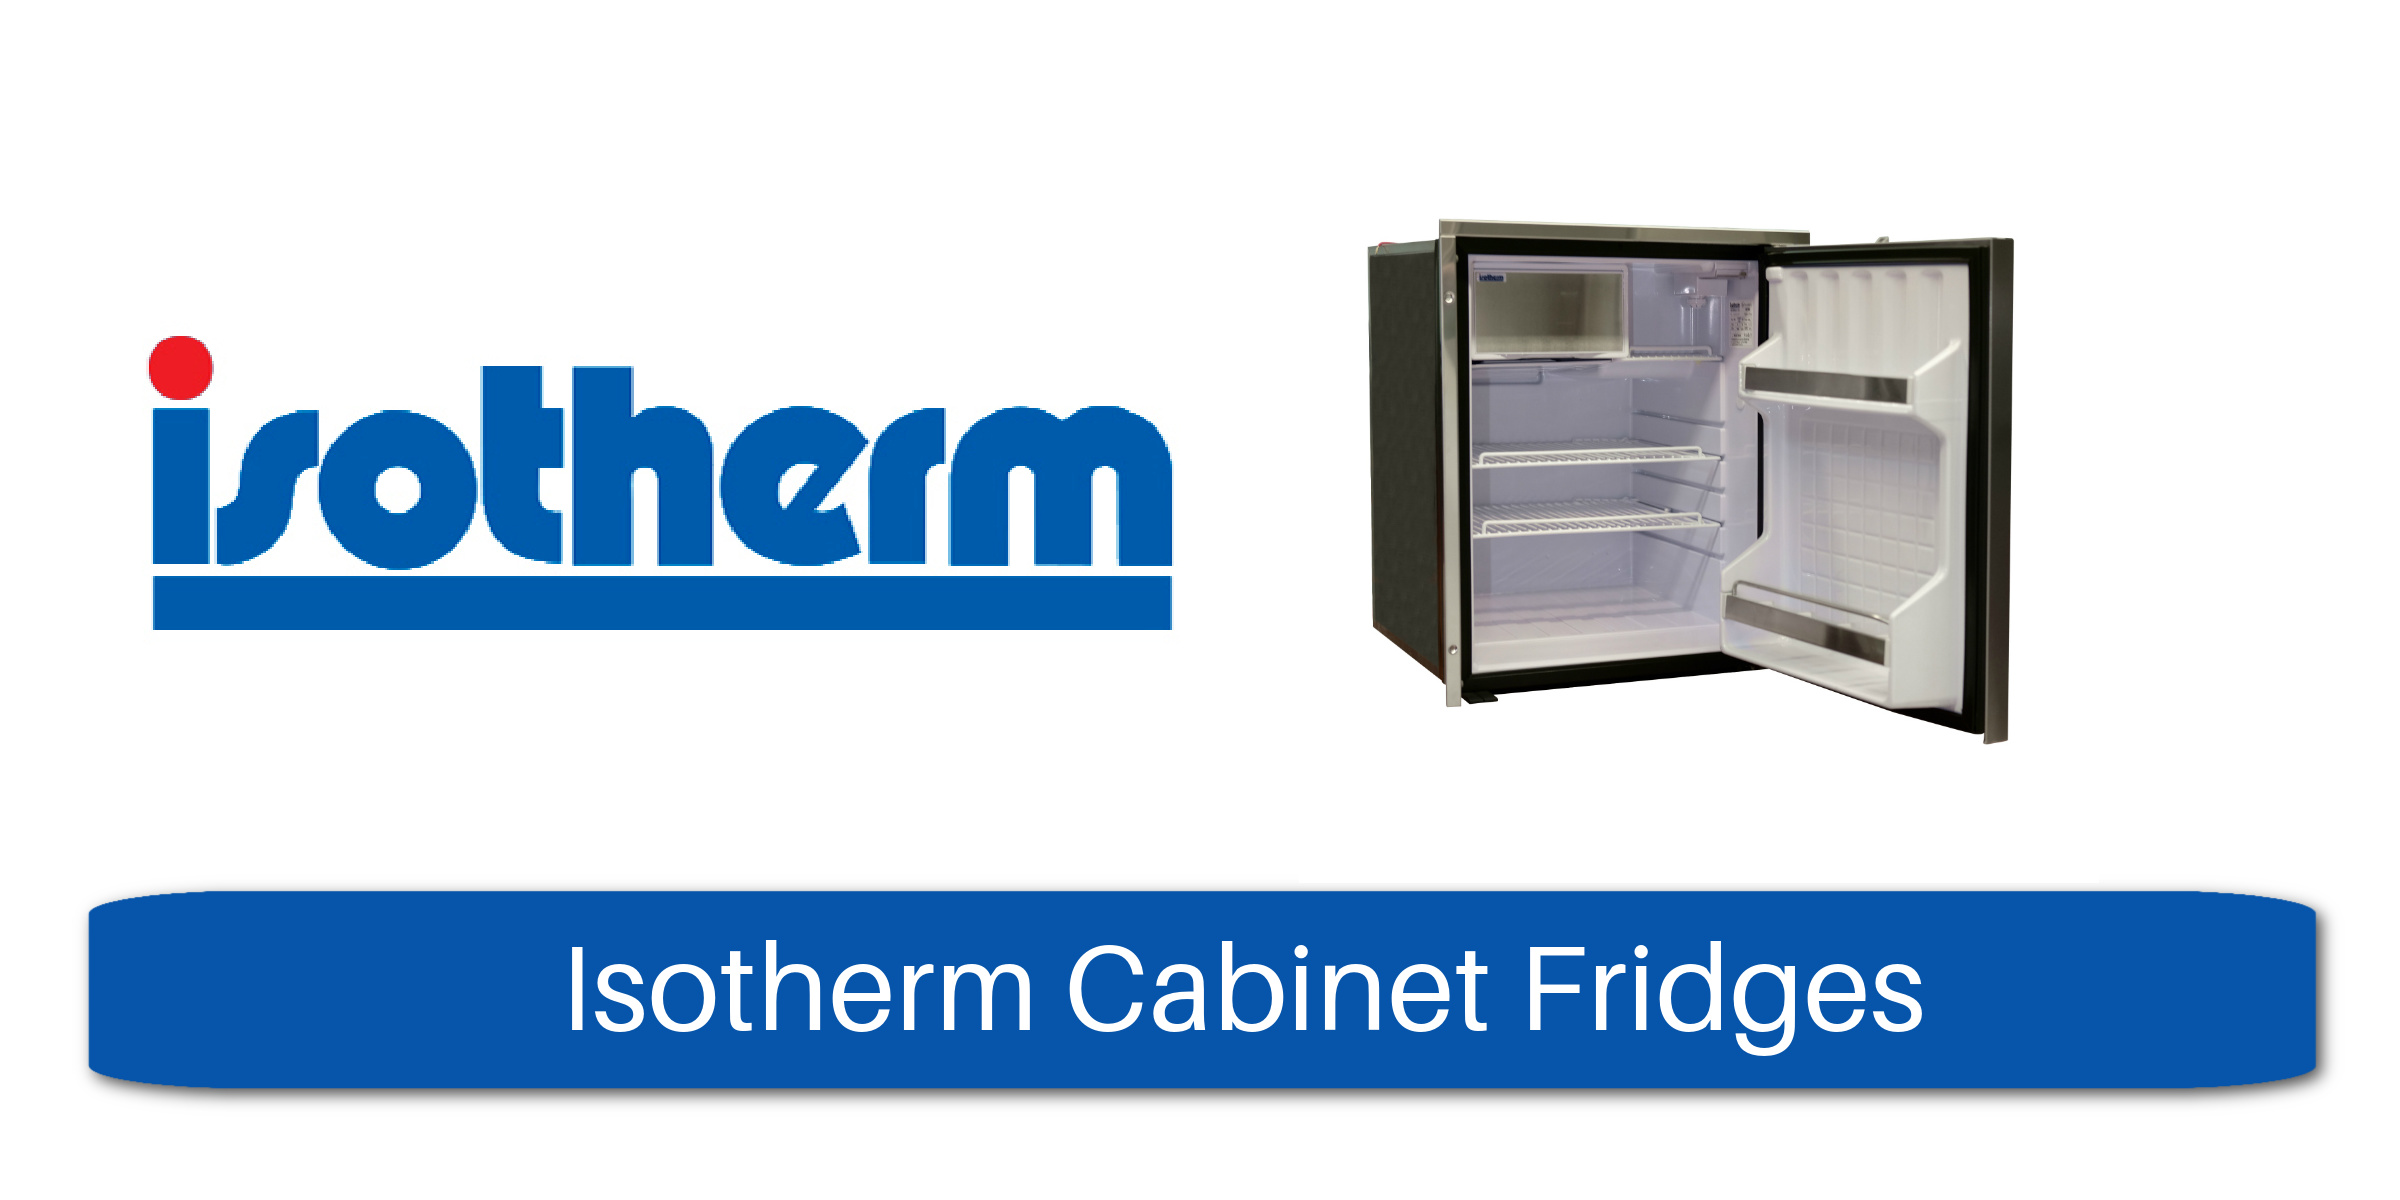 Isotherm Cabinet Fridges